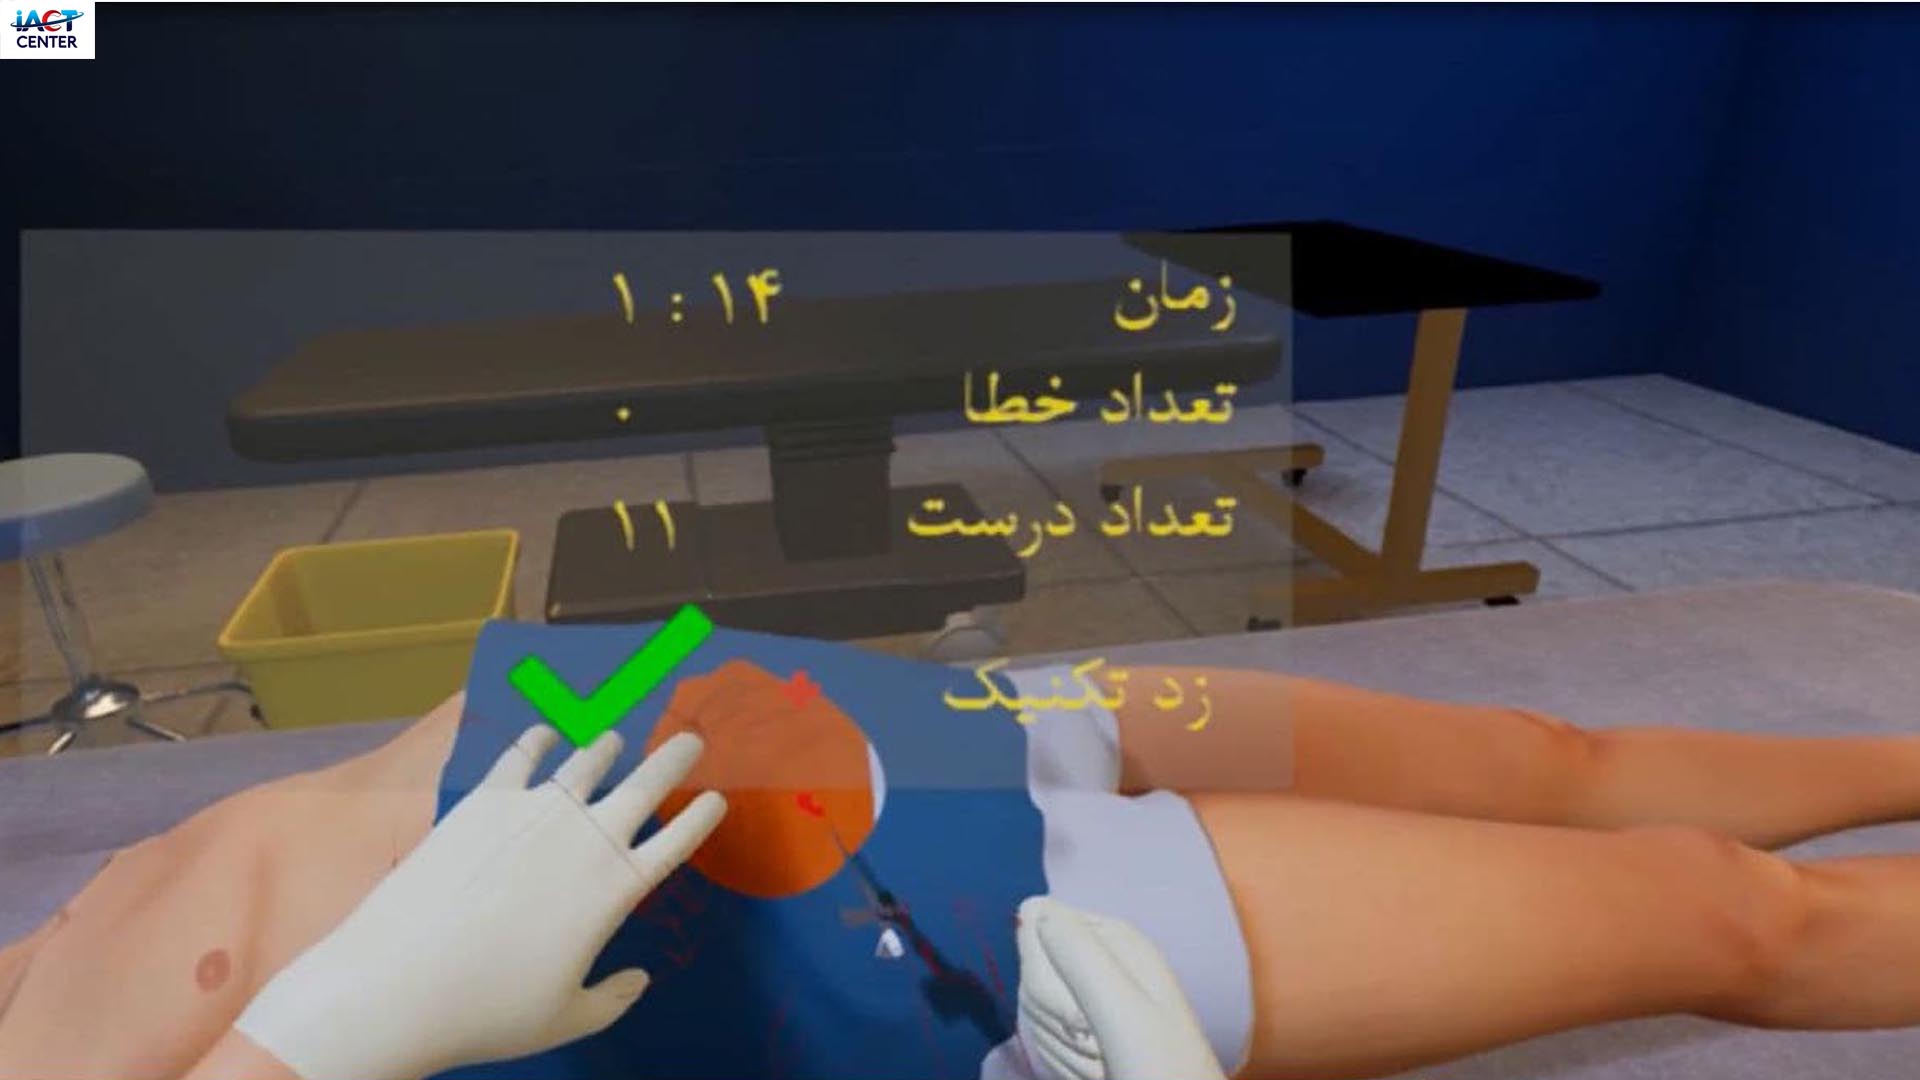 Abdominocentesis using 3D virtual reality technology